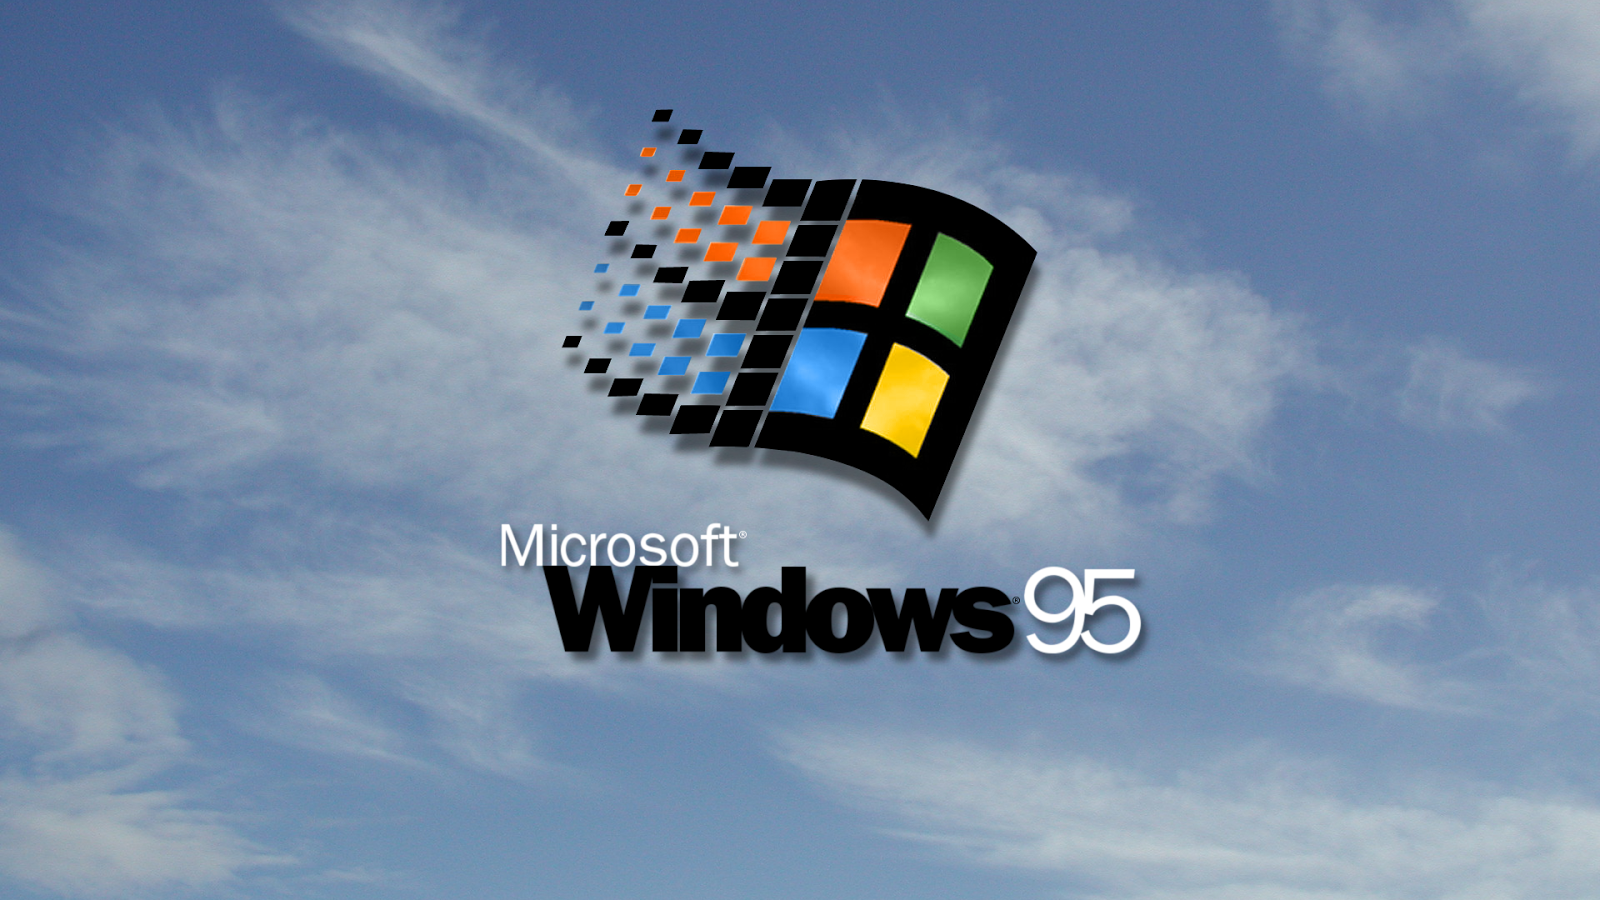 Windows Full Screen Pics Microsoft Wallpaper Of